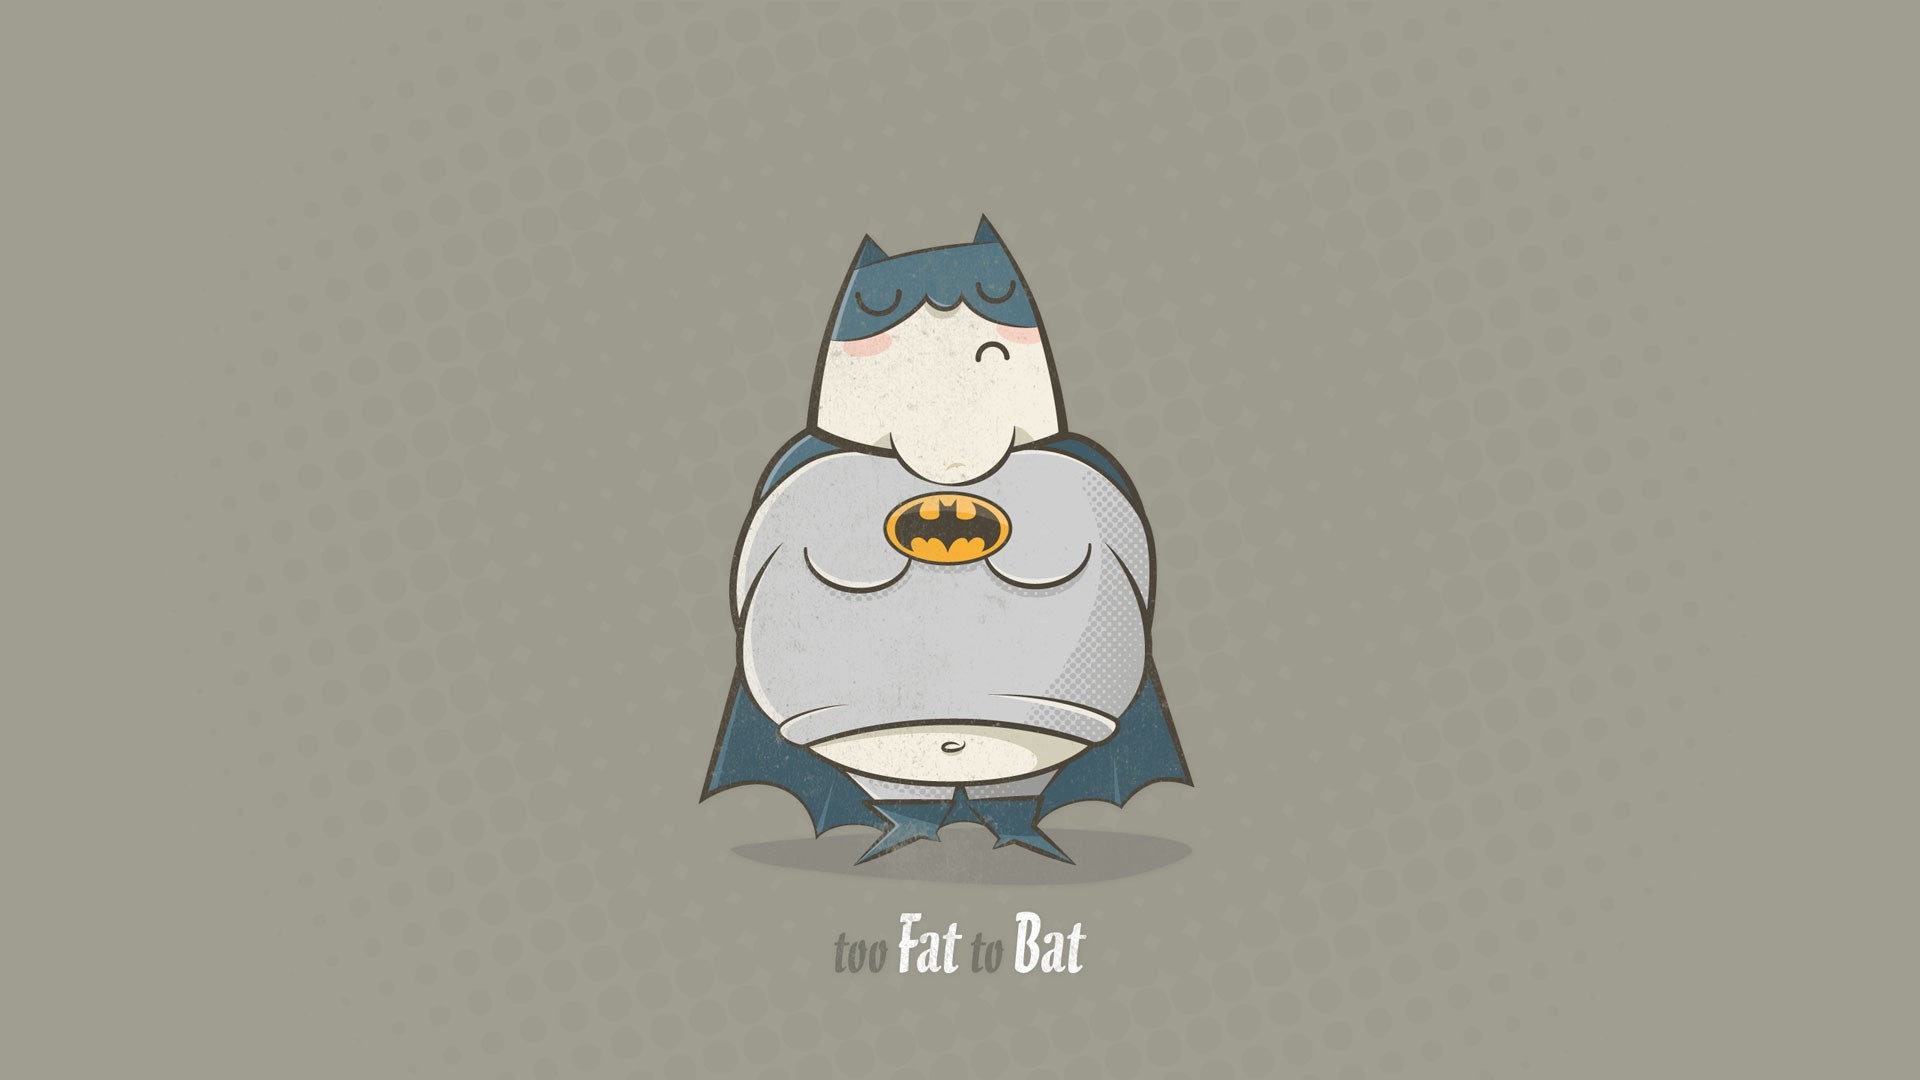 General 1920x1080 Batman humor simple background gray gray background boobs closed eyes artwork chubby superhero